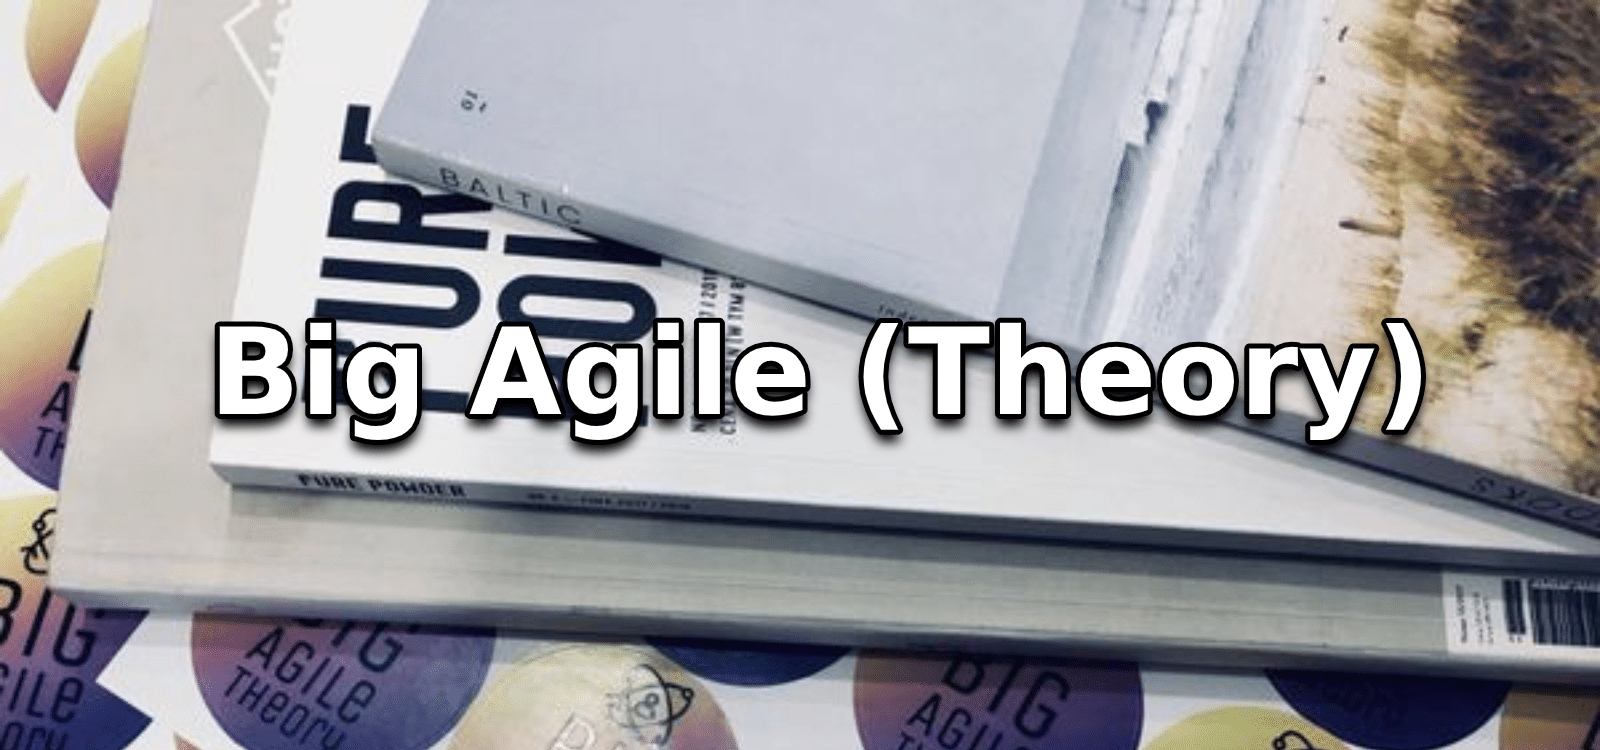 Big Agile Theory logo